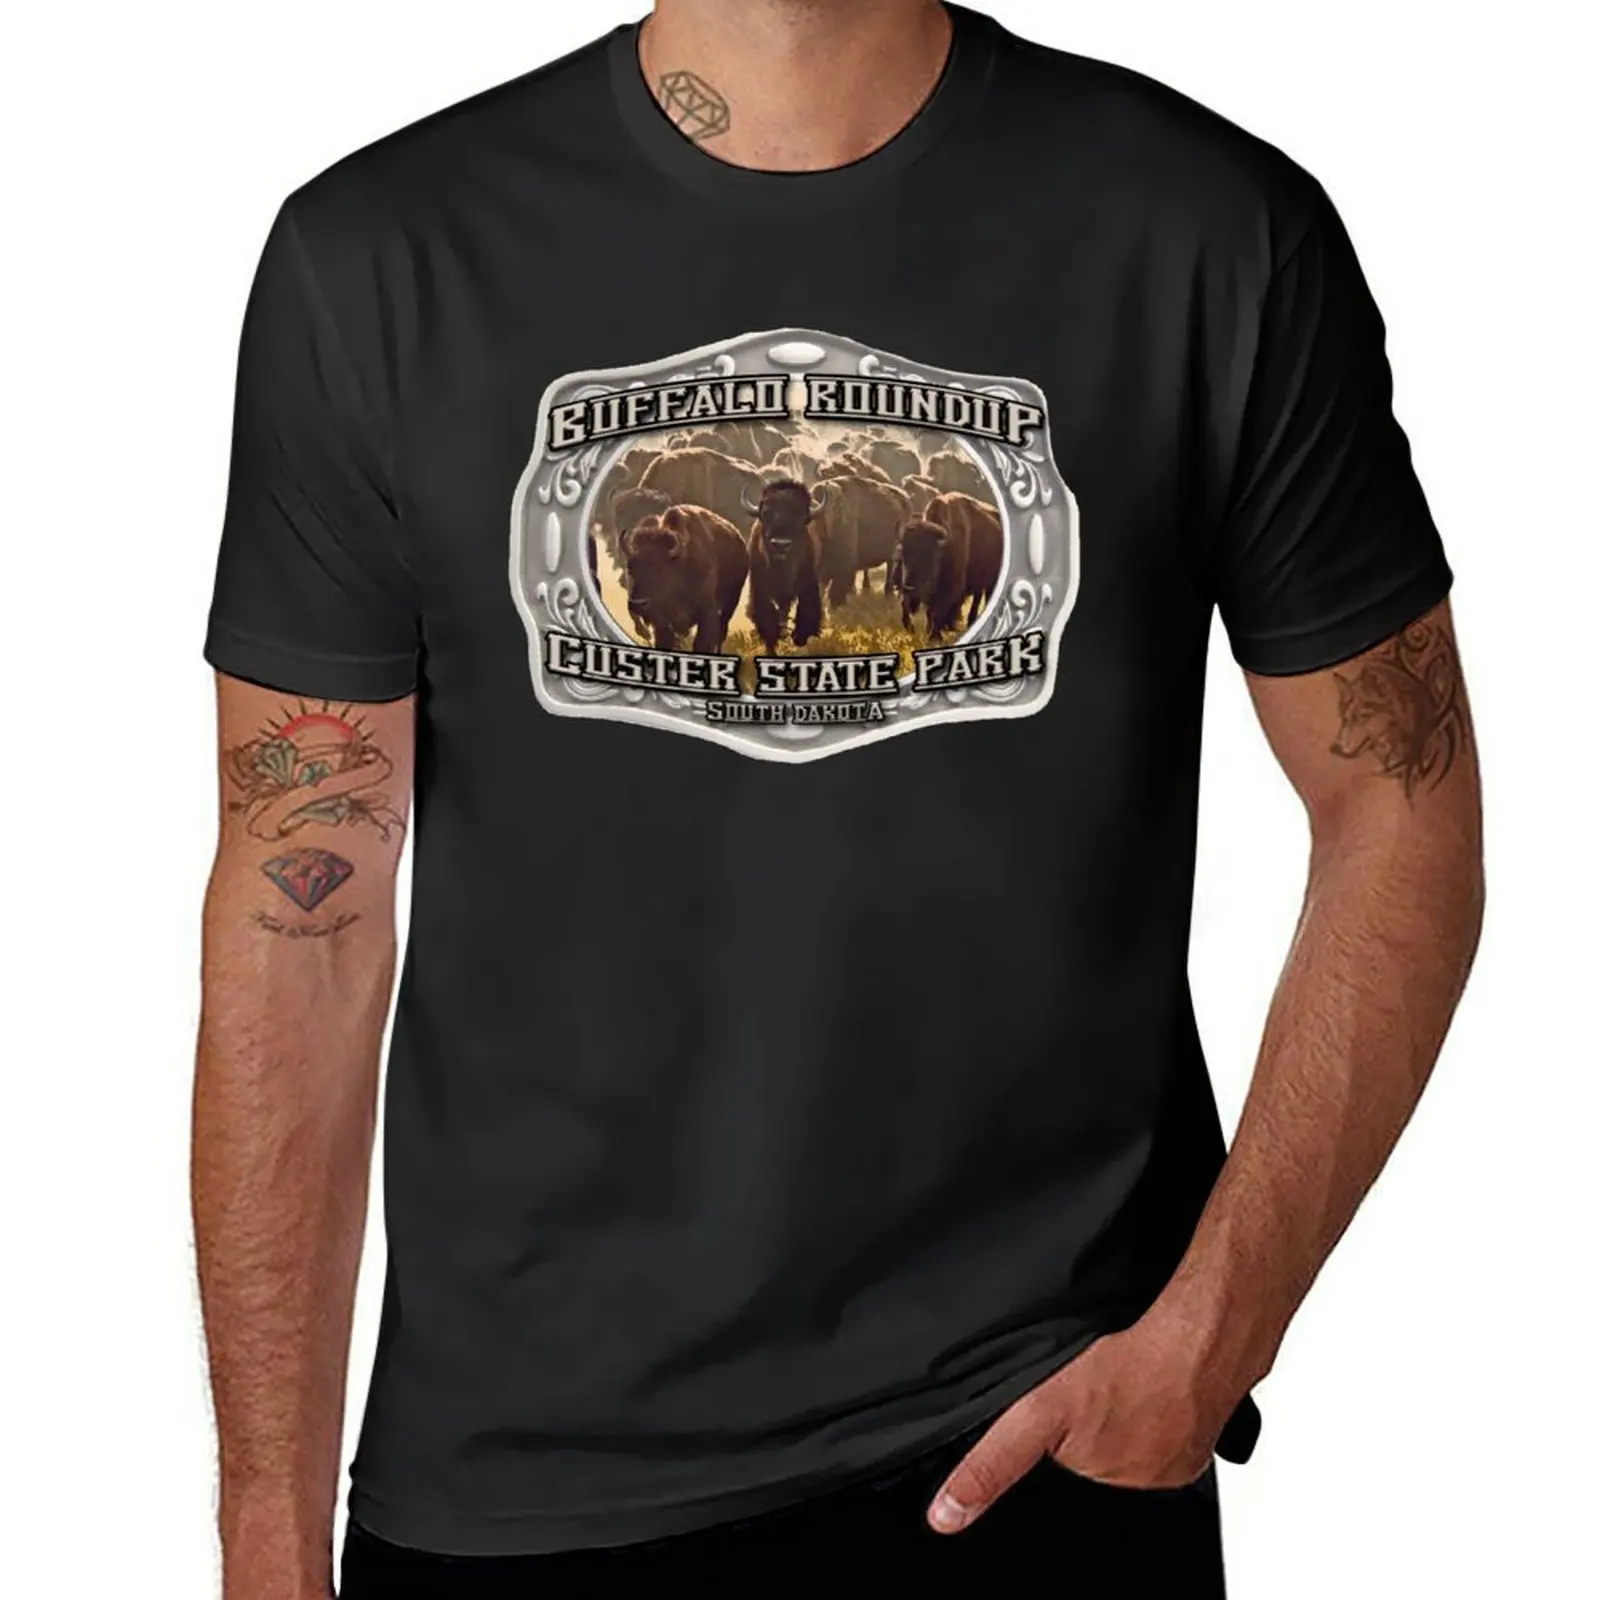 Custer State Park Buffalo Roundup T-Shirt anime clothes customs t shirt men